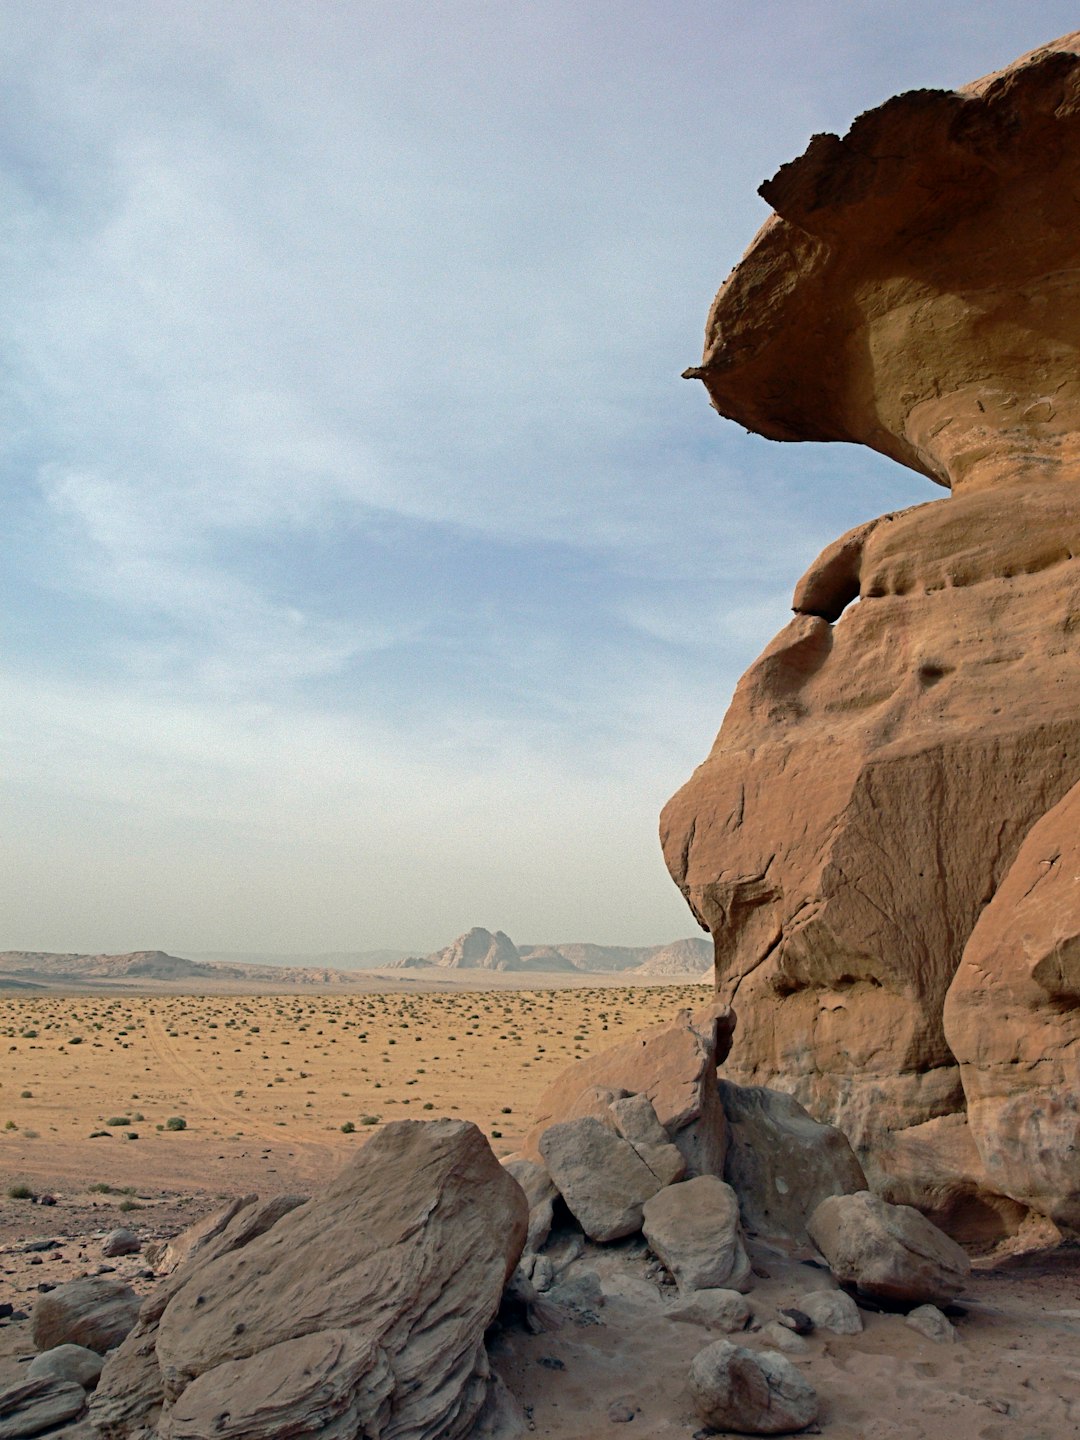 travelers stories about Desert in Wadi Rum, Jordan